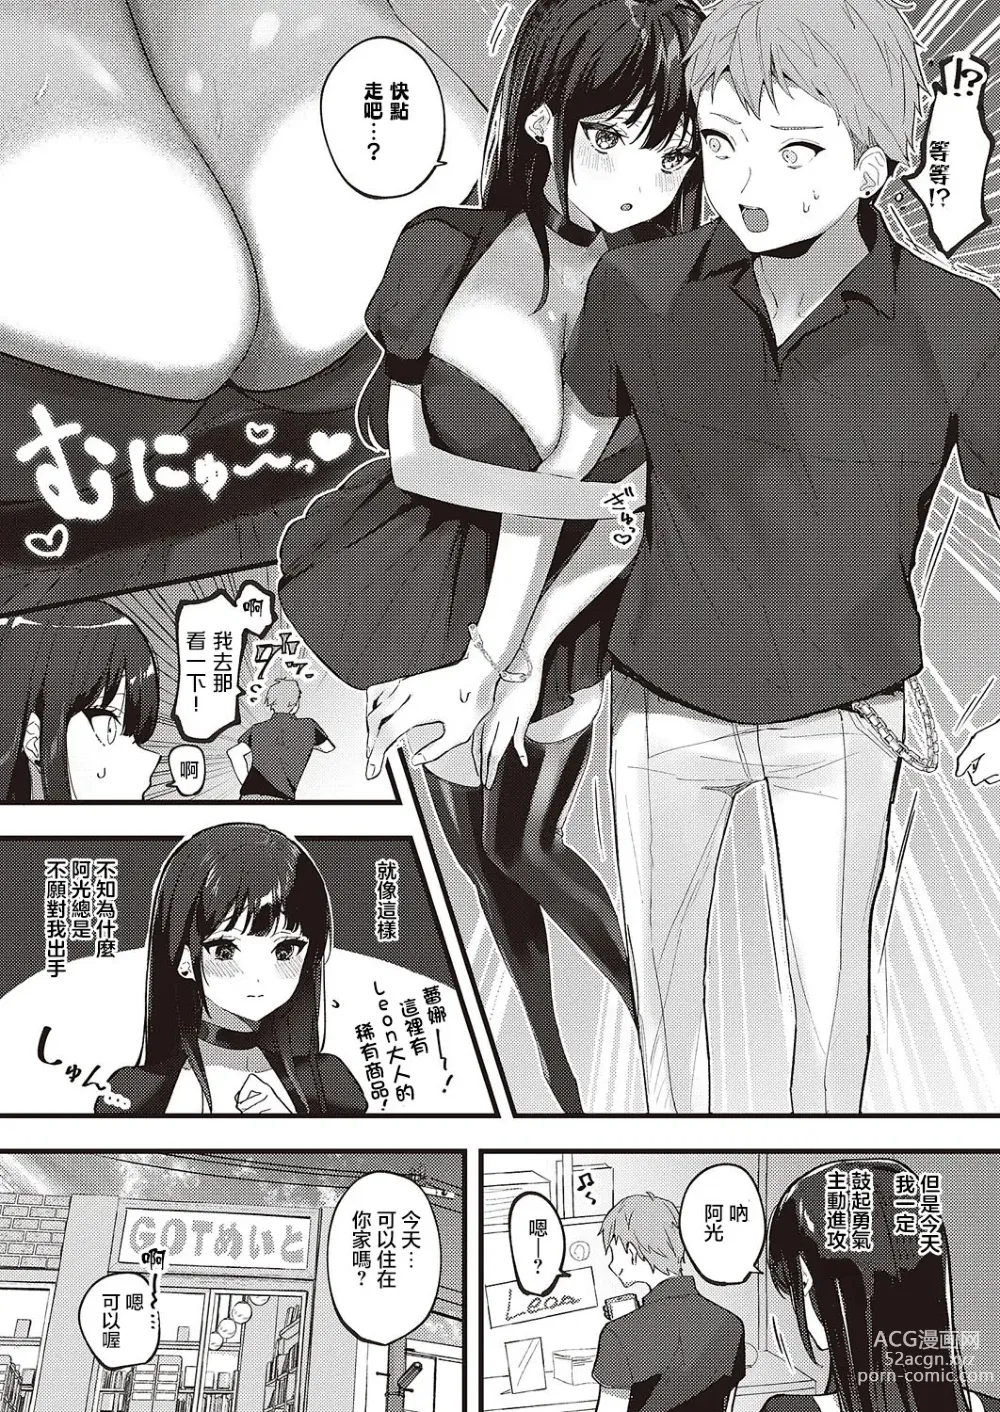 Page 5 of manga Cool Voice wa Kimi no Tame